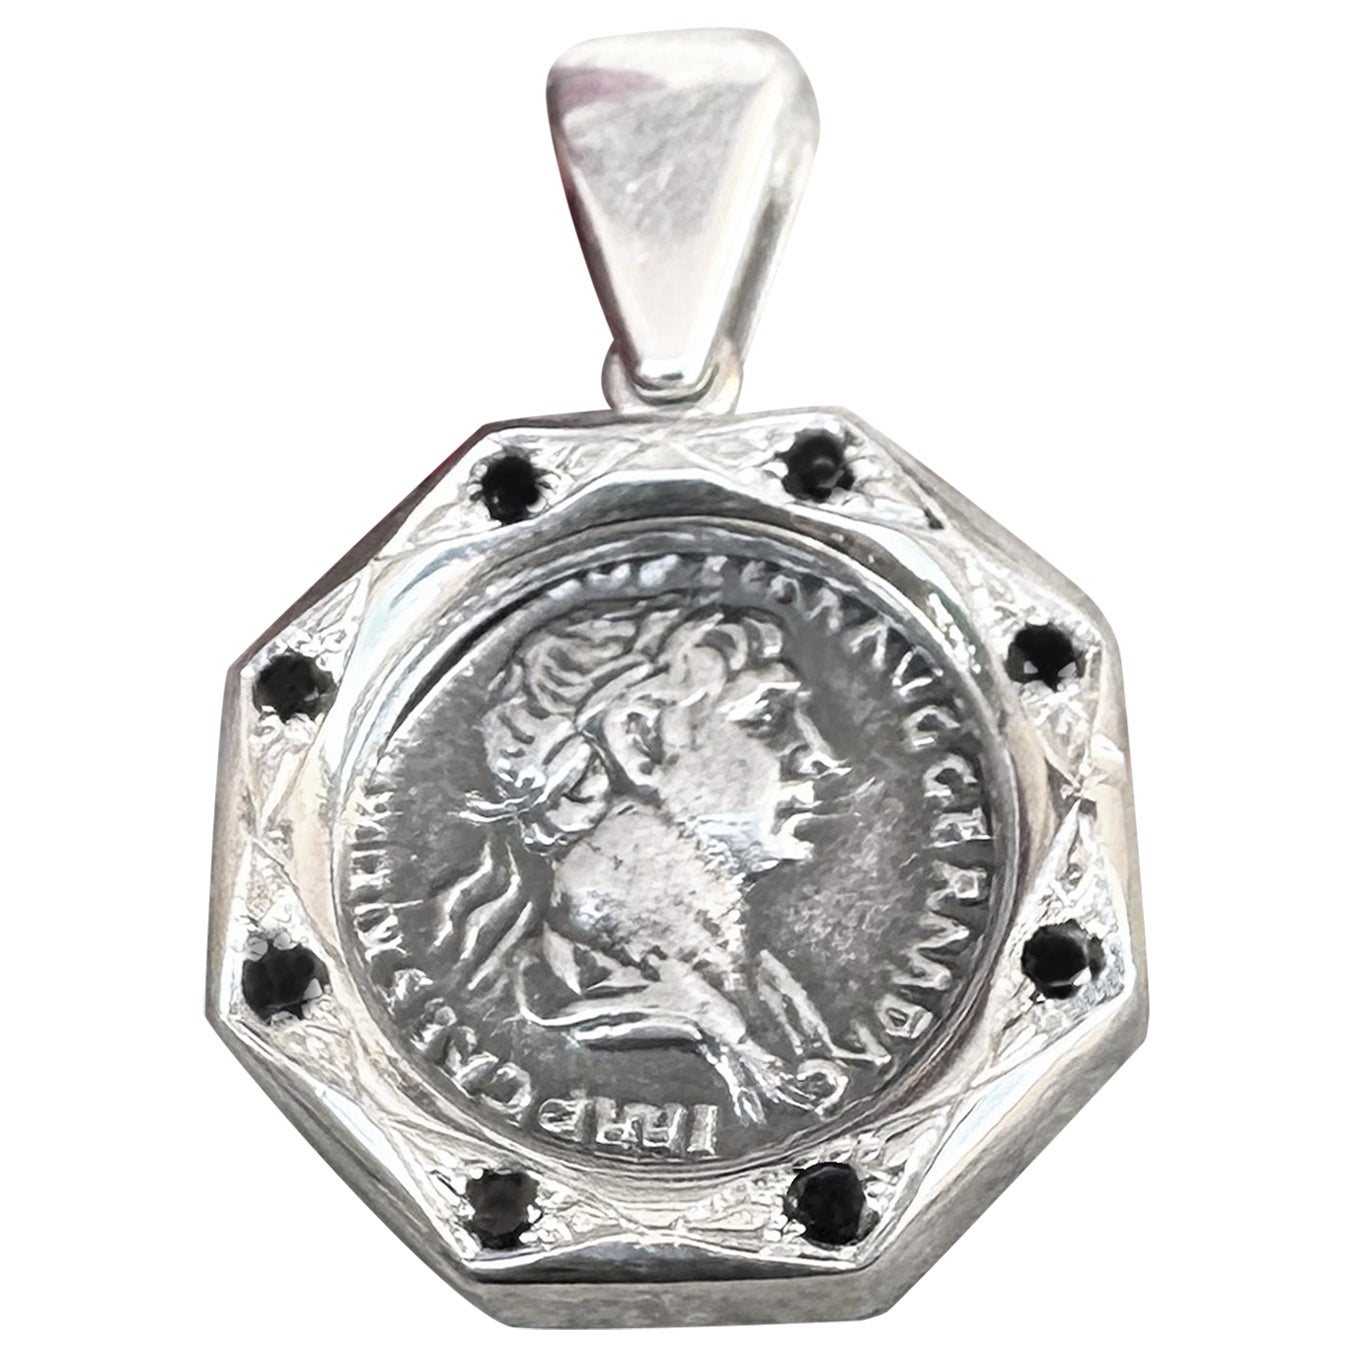 Roman Coin 2nd Cent. AD Pendant w/black diamonds depicting Emperor Trajan For Sale